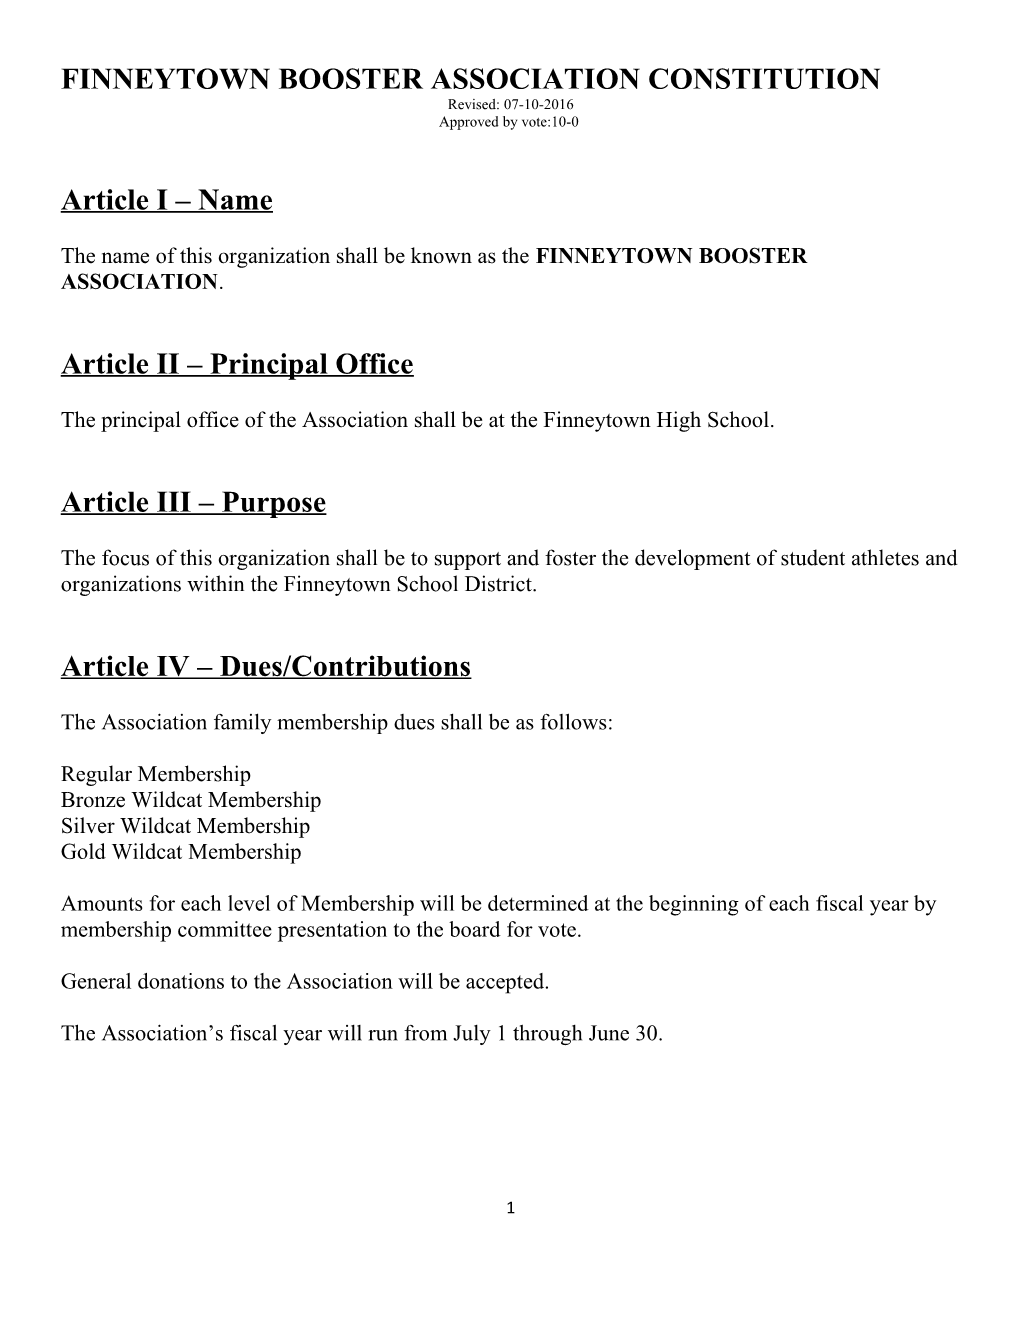 Finneytown Booster Association Constitution